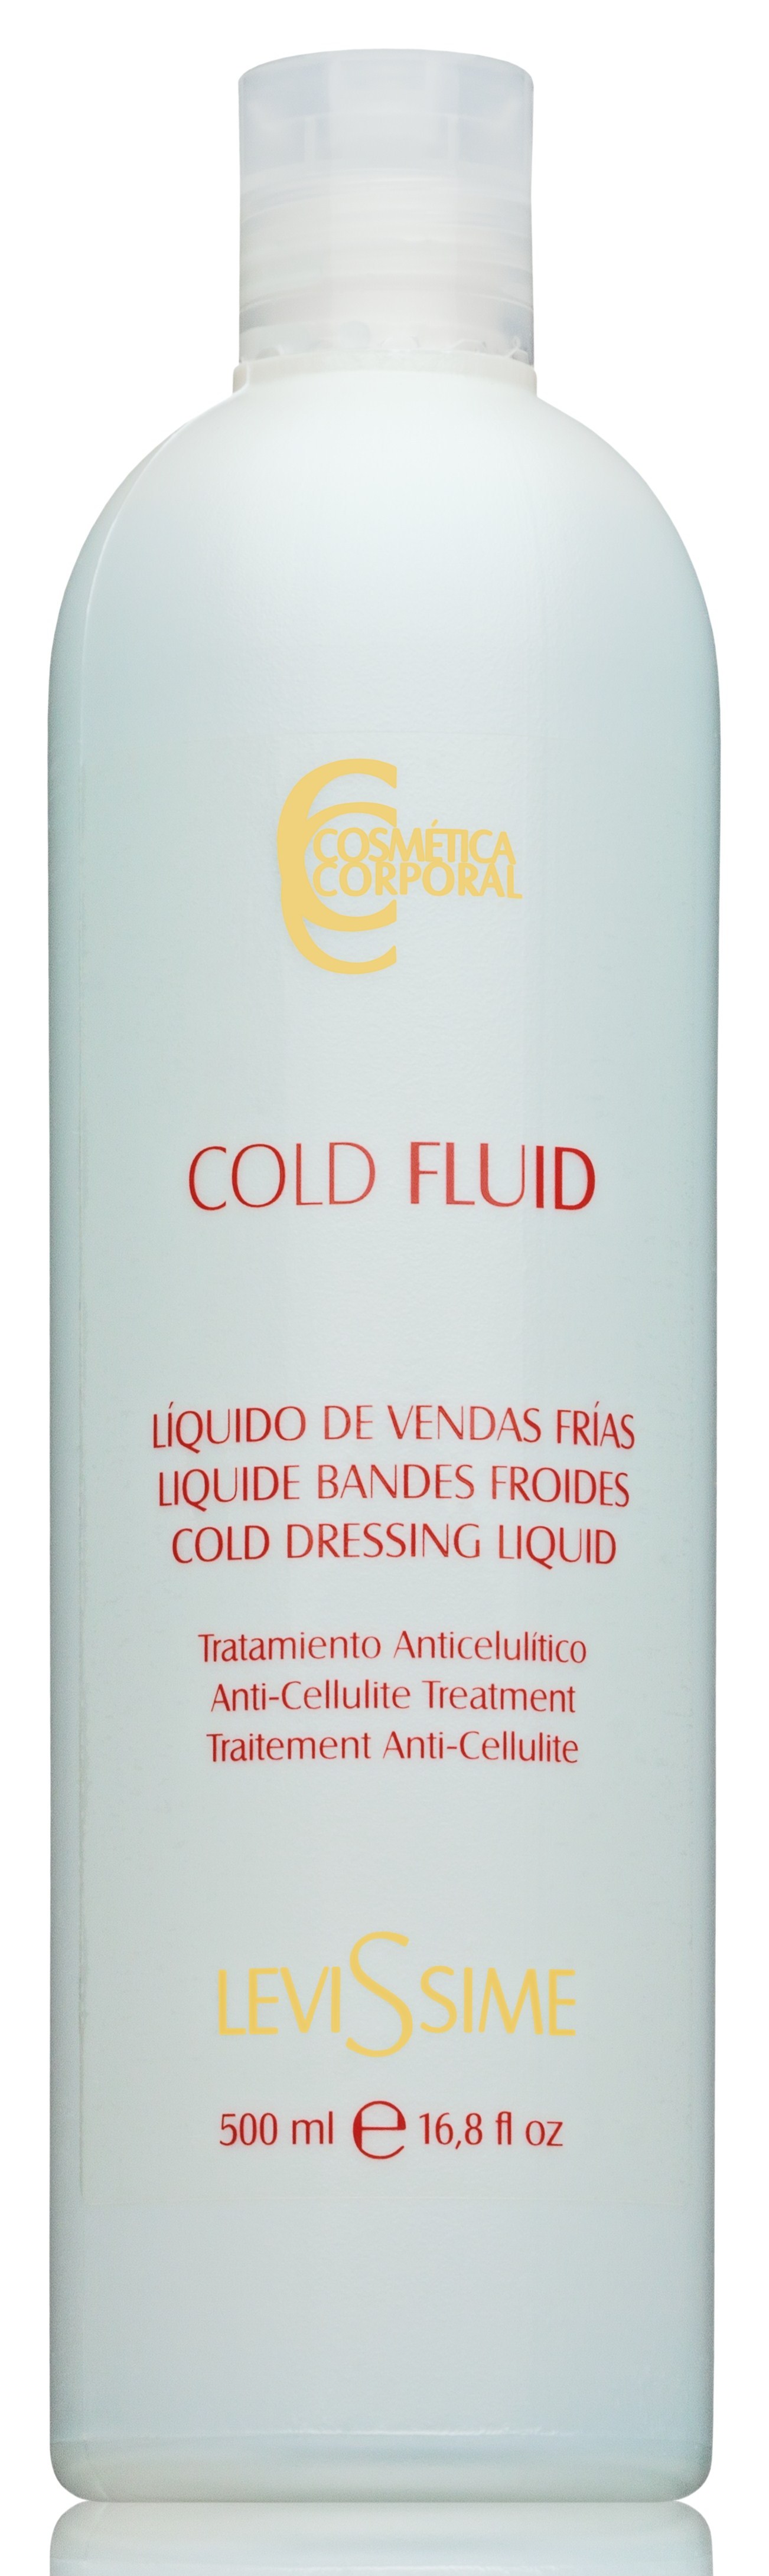 LEVISSIME Крио-флюид / Cold Fluid 500 мл